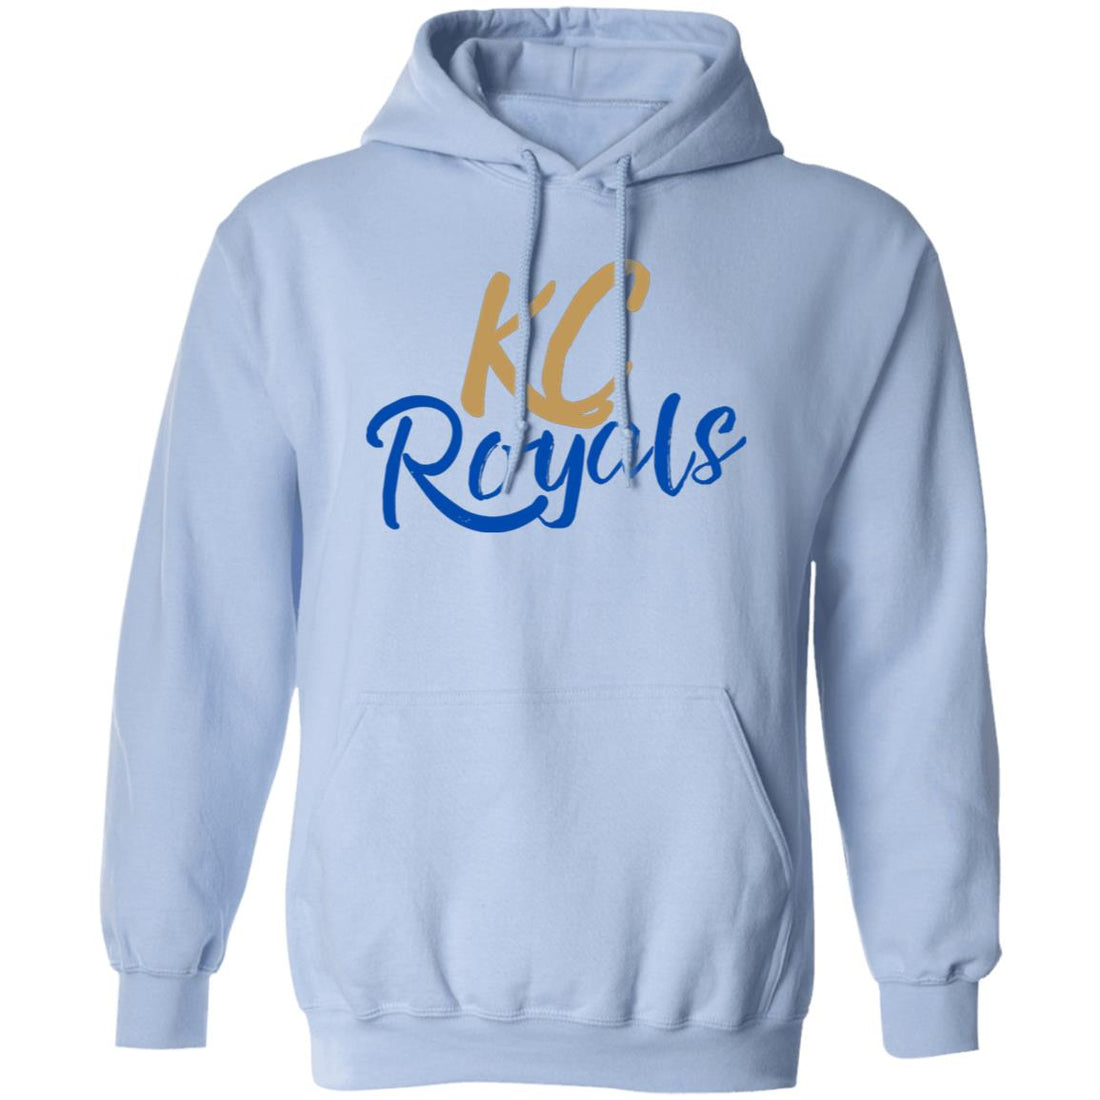 Royals KC Hoodie - Sweatshirts - Positively Sassy - Royals KC Hoodie